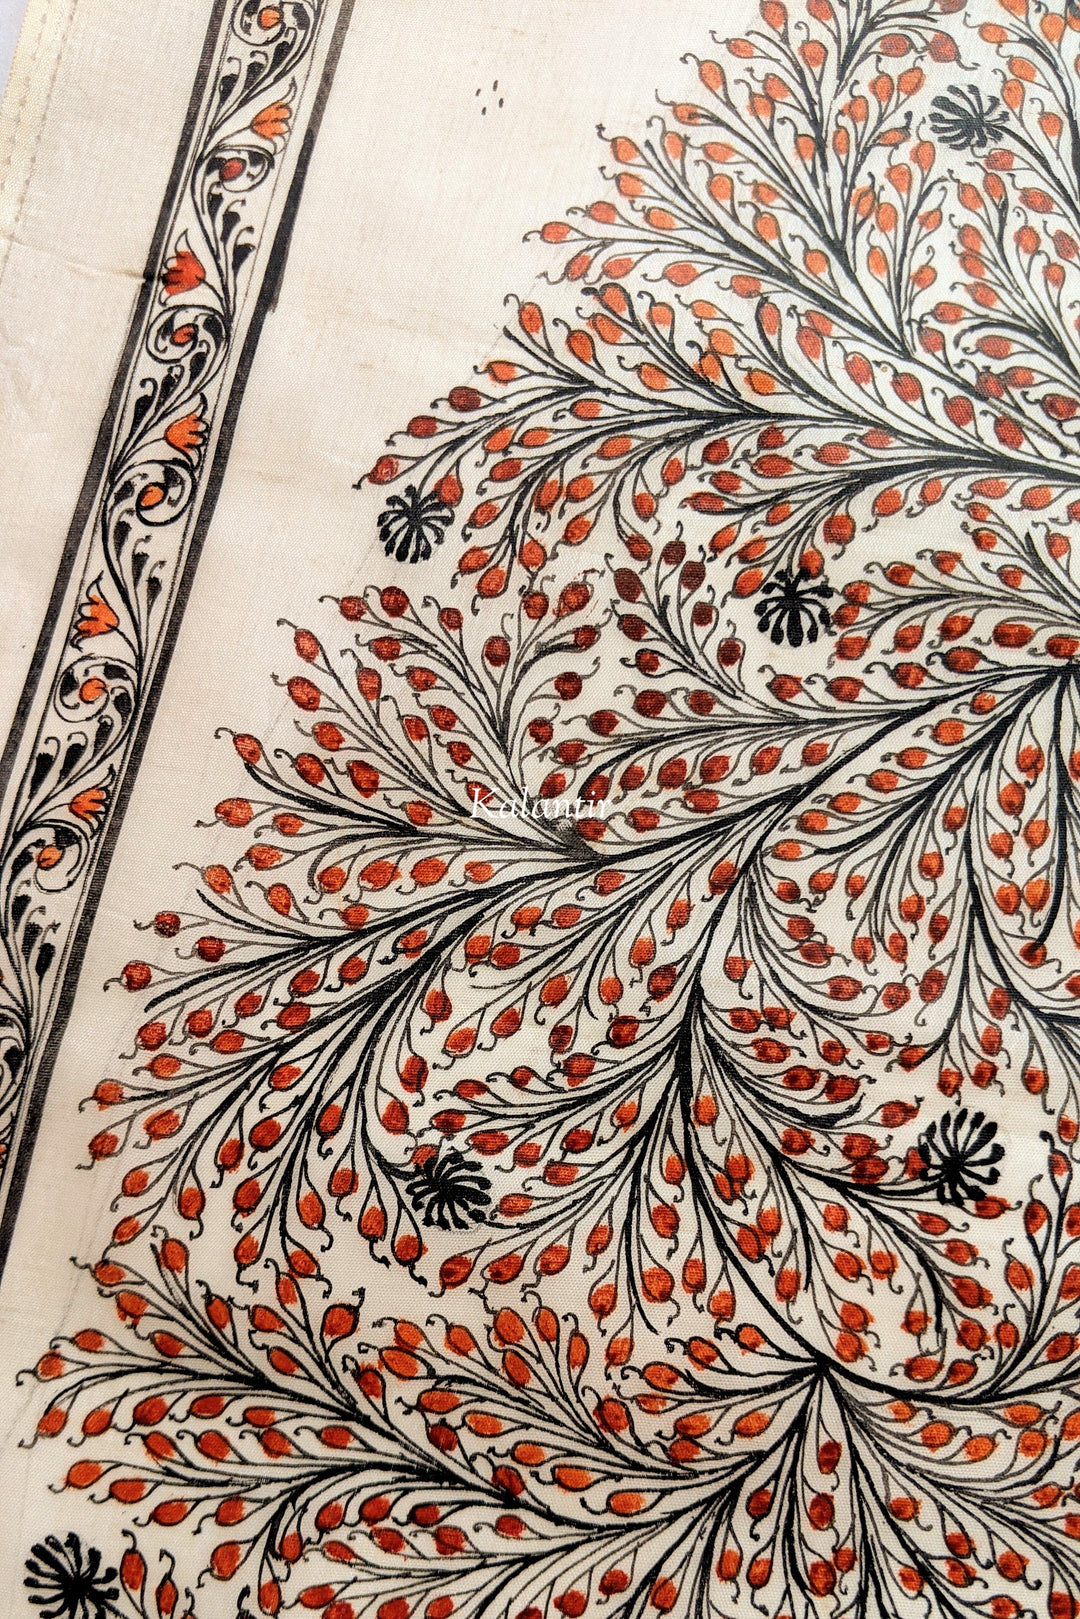 Pintura Árbol Mágico de la Vida en Rojo Ladrillo Sólido sobre Seda | Saura Arte de Odisha | 21 pulgadas x 15 pulgadas 